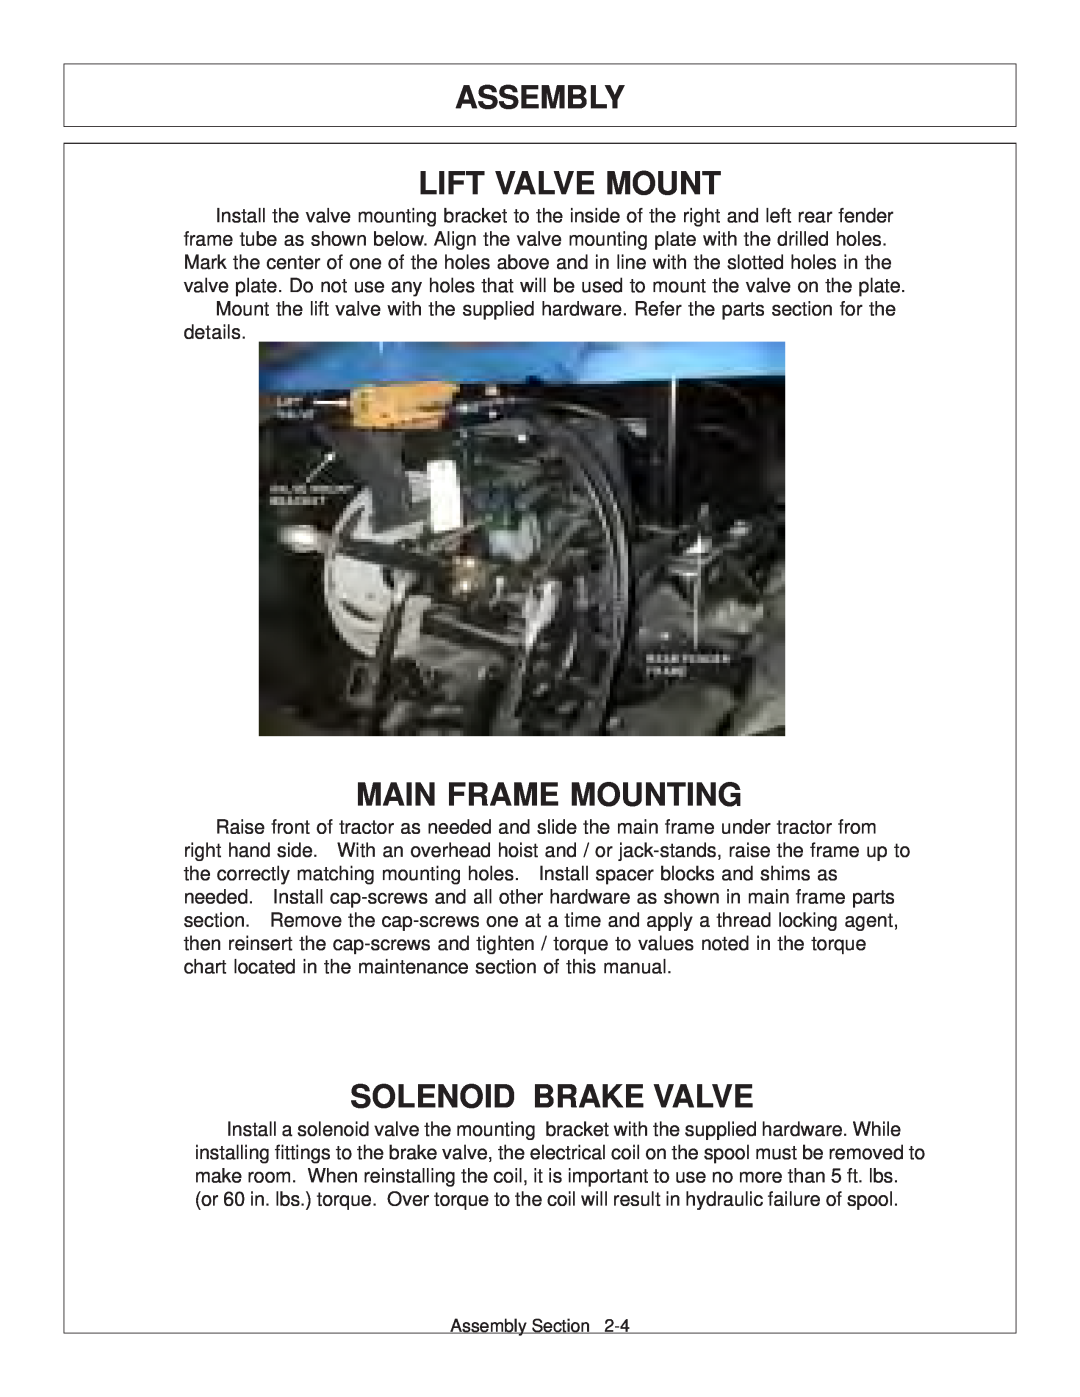 Tiger Products Co., Ltd 6020009 manual Assembly Lift Valve Mount, Main Frame Mounting, Solenoid Brake Valve 